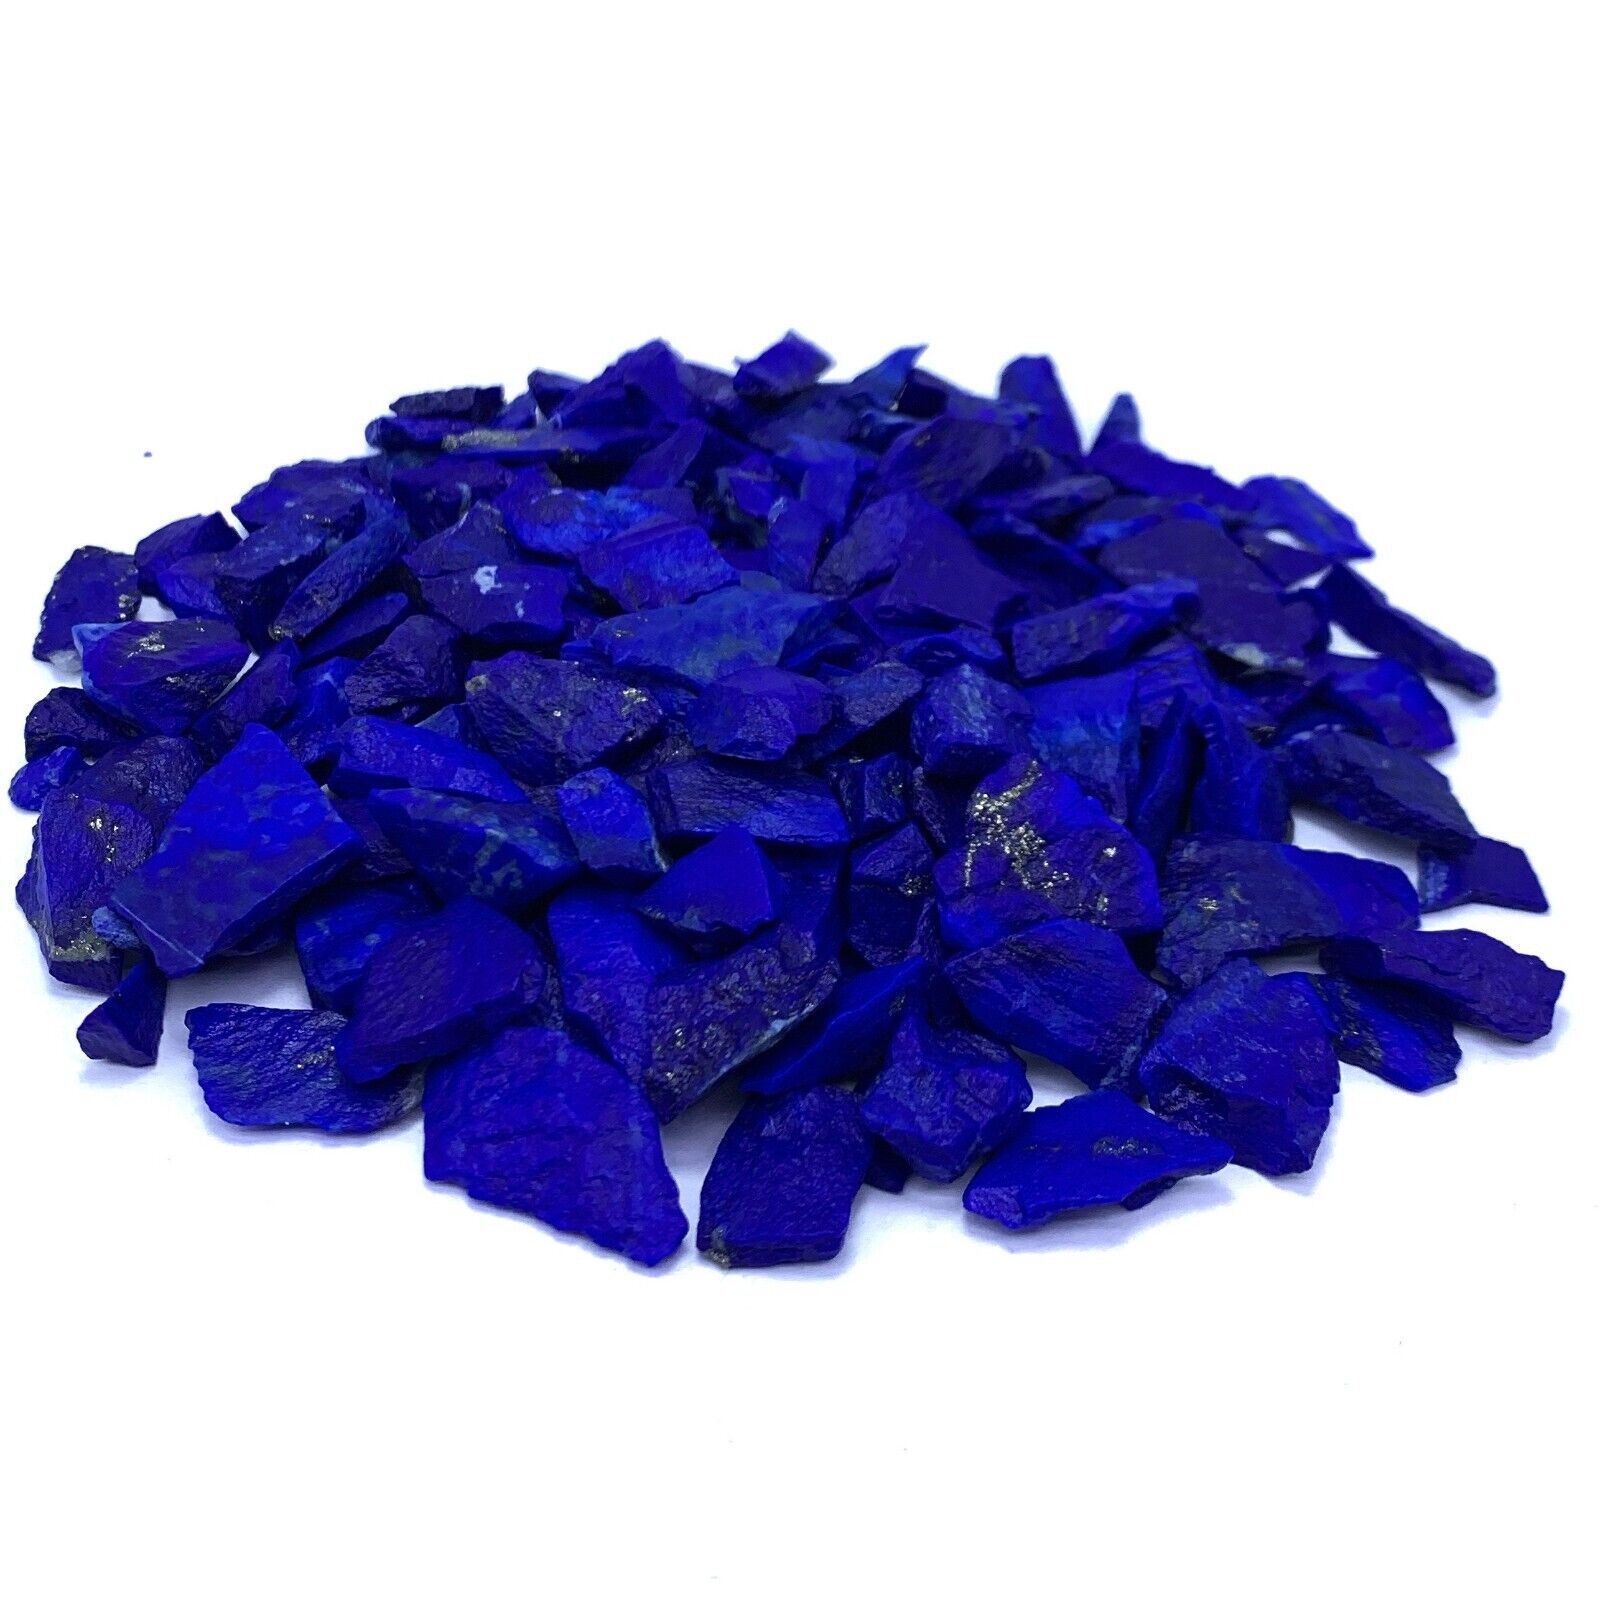 310g A+++ Quality Lapis Lazuli Mine 4, Lapis Lazuli, Raw Lapis Lazuli, Rough